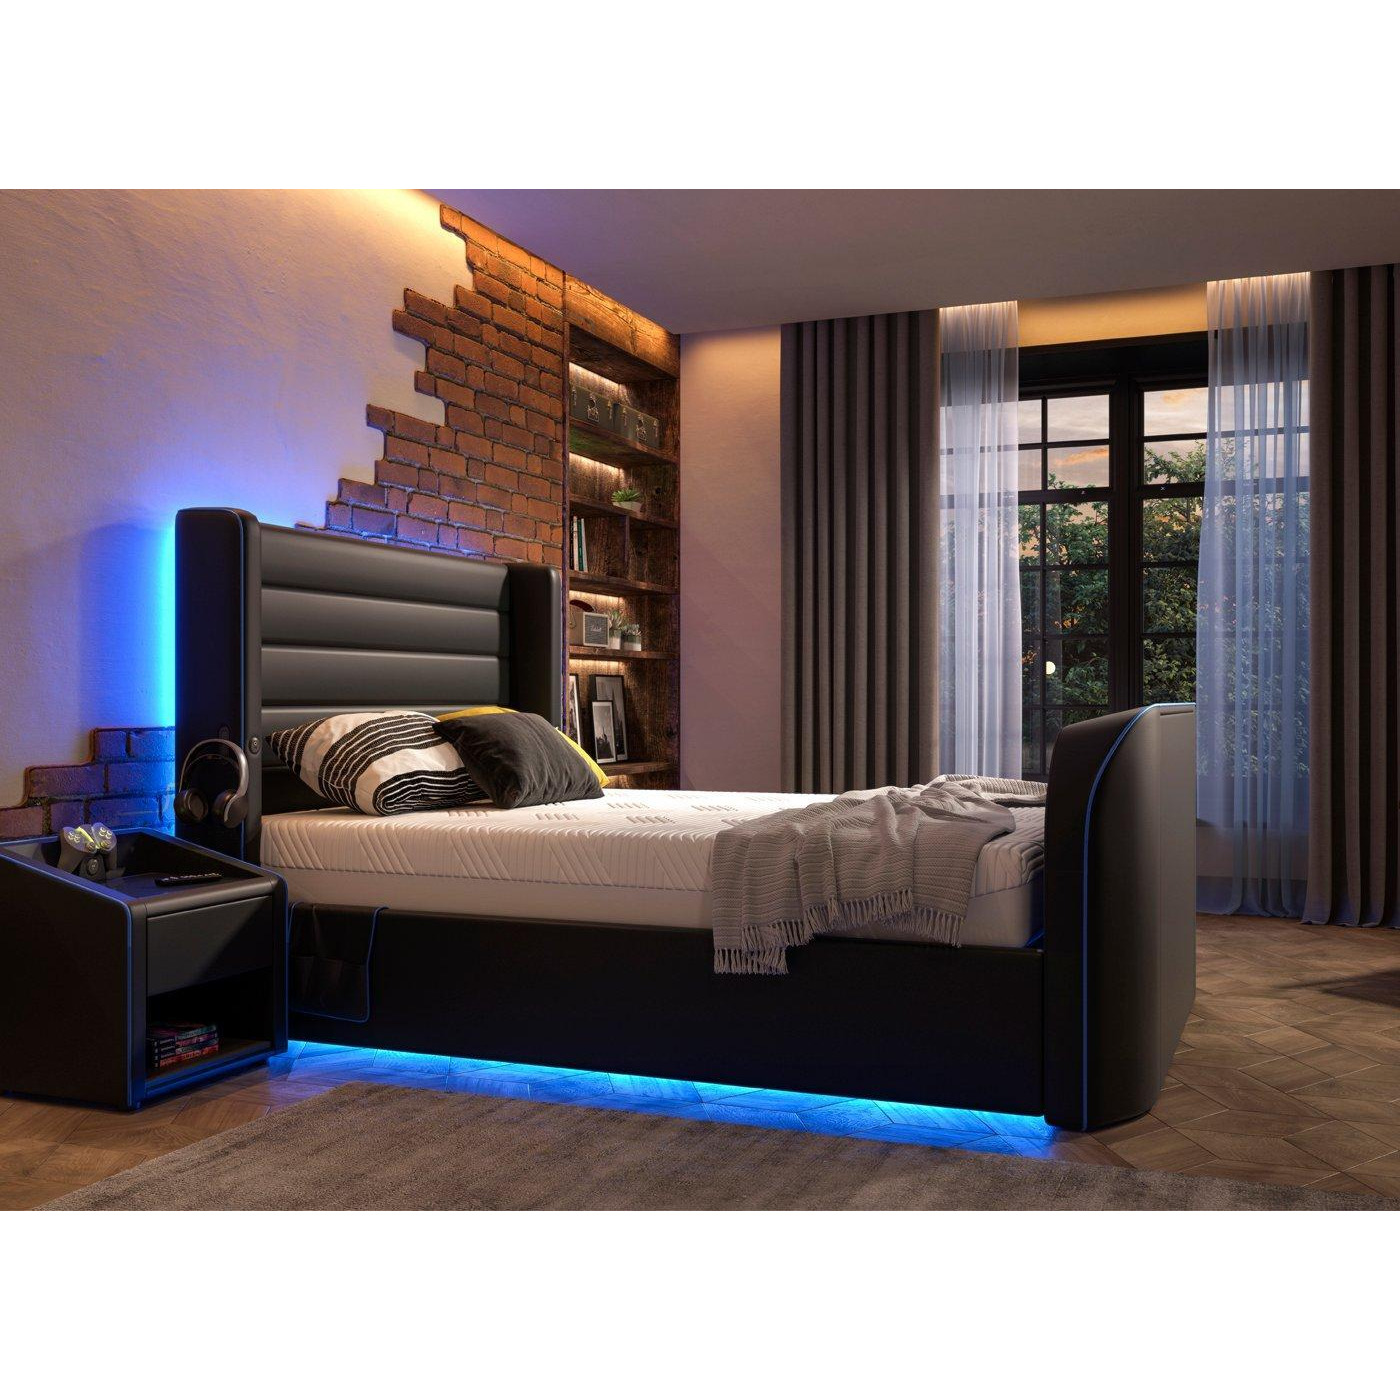 Drift Gaming Sleepmotion 200i Adjustable TV Bed Frame - 4'6 Double - Black